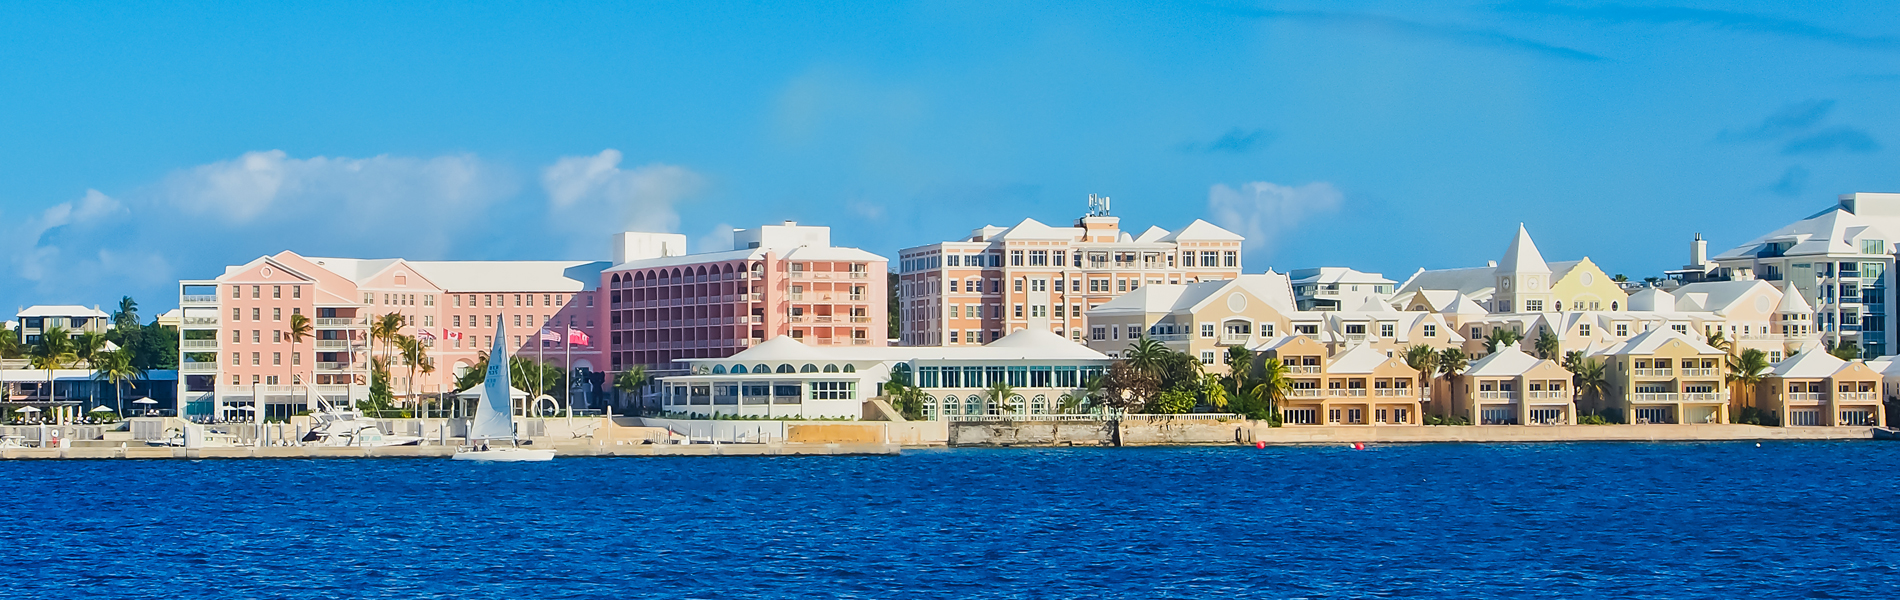 Bermuda ocean and buildings